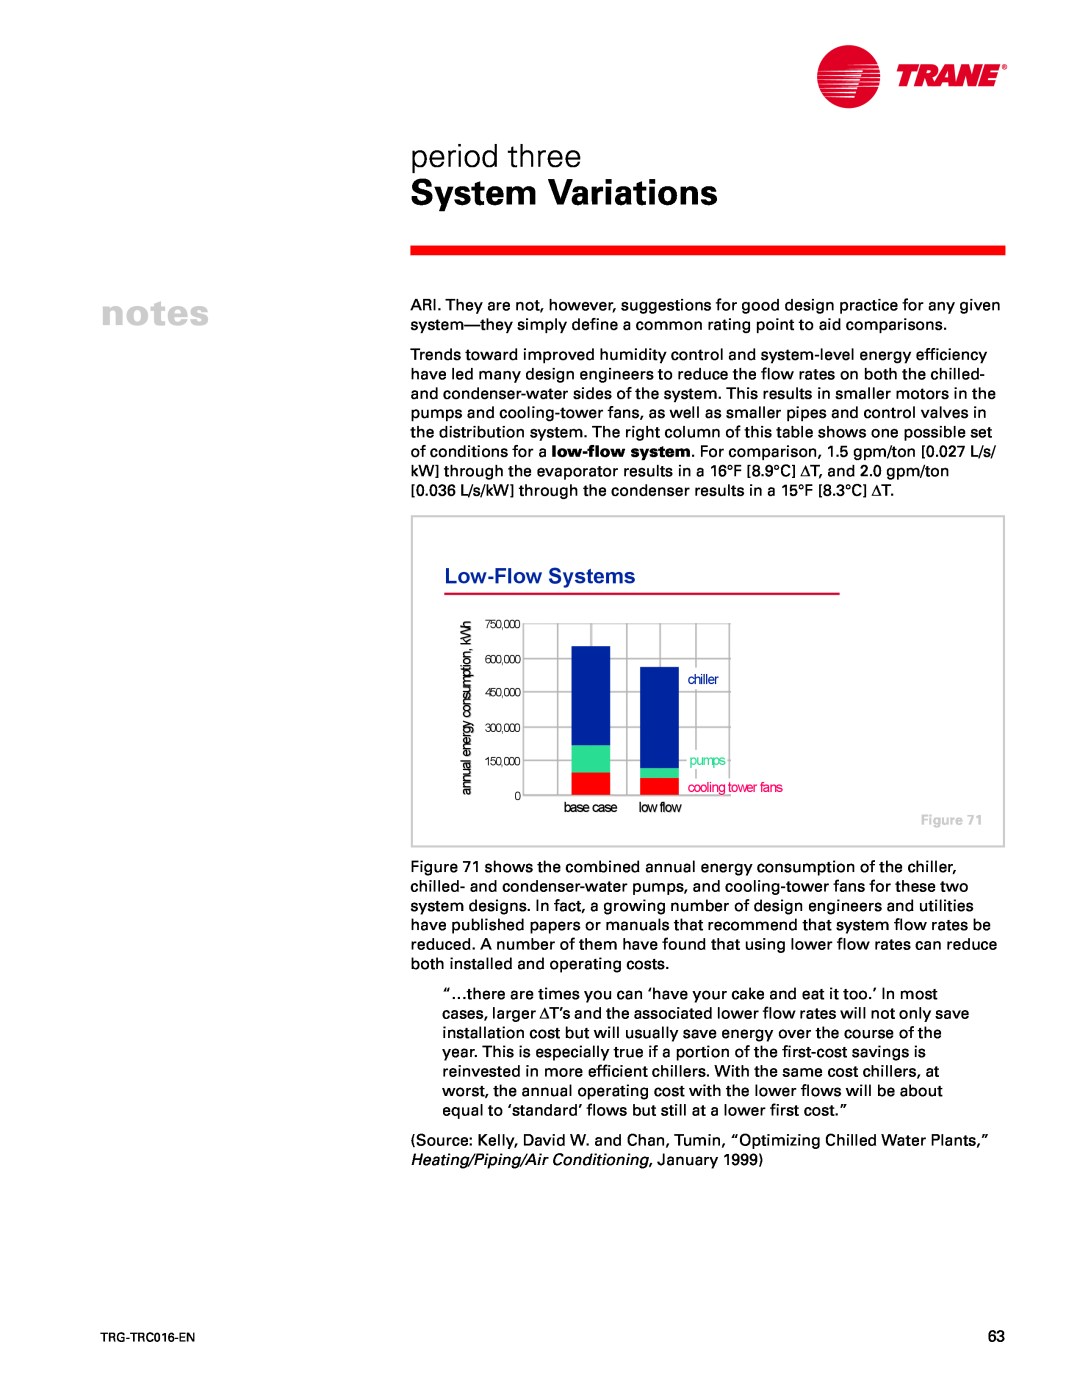 Trane TRG-TRC016-EN manual Low-FlowSystems, notes, System Variations, period three 